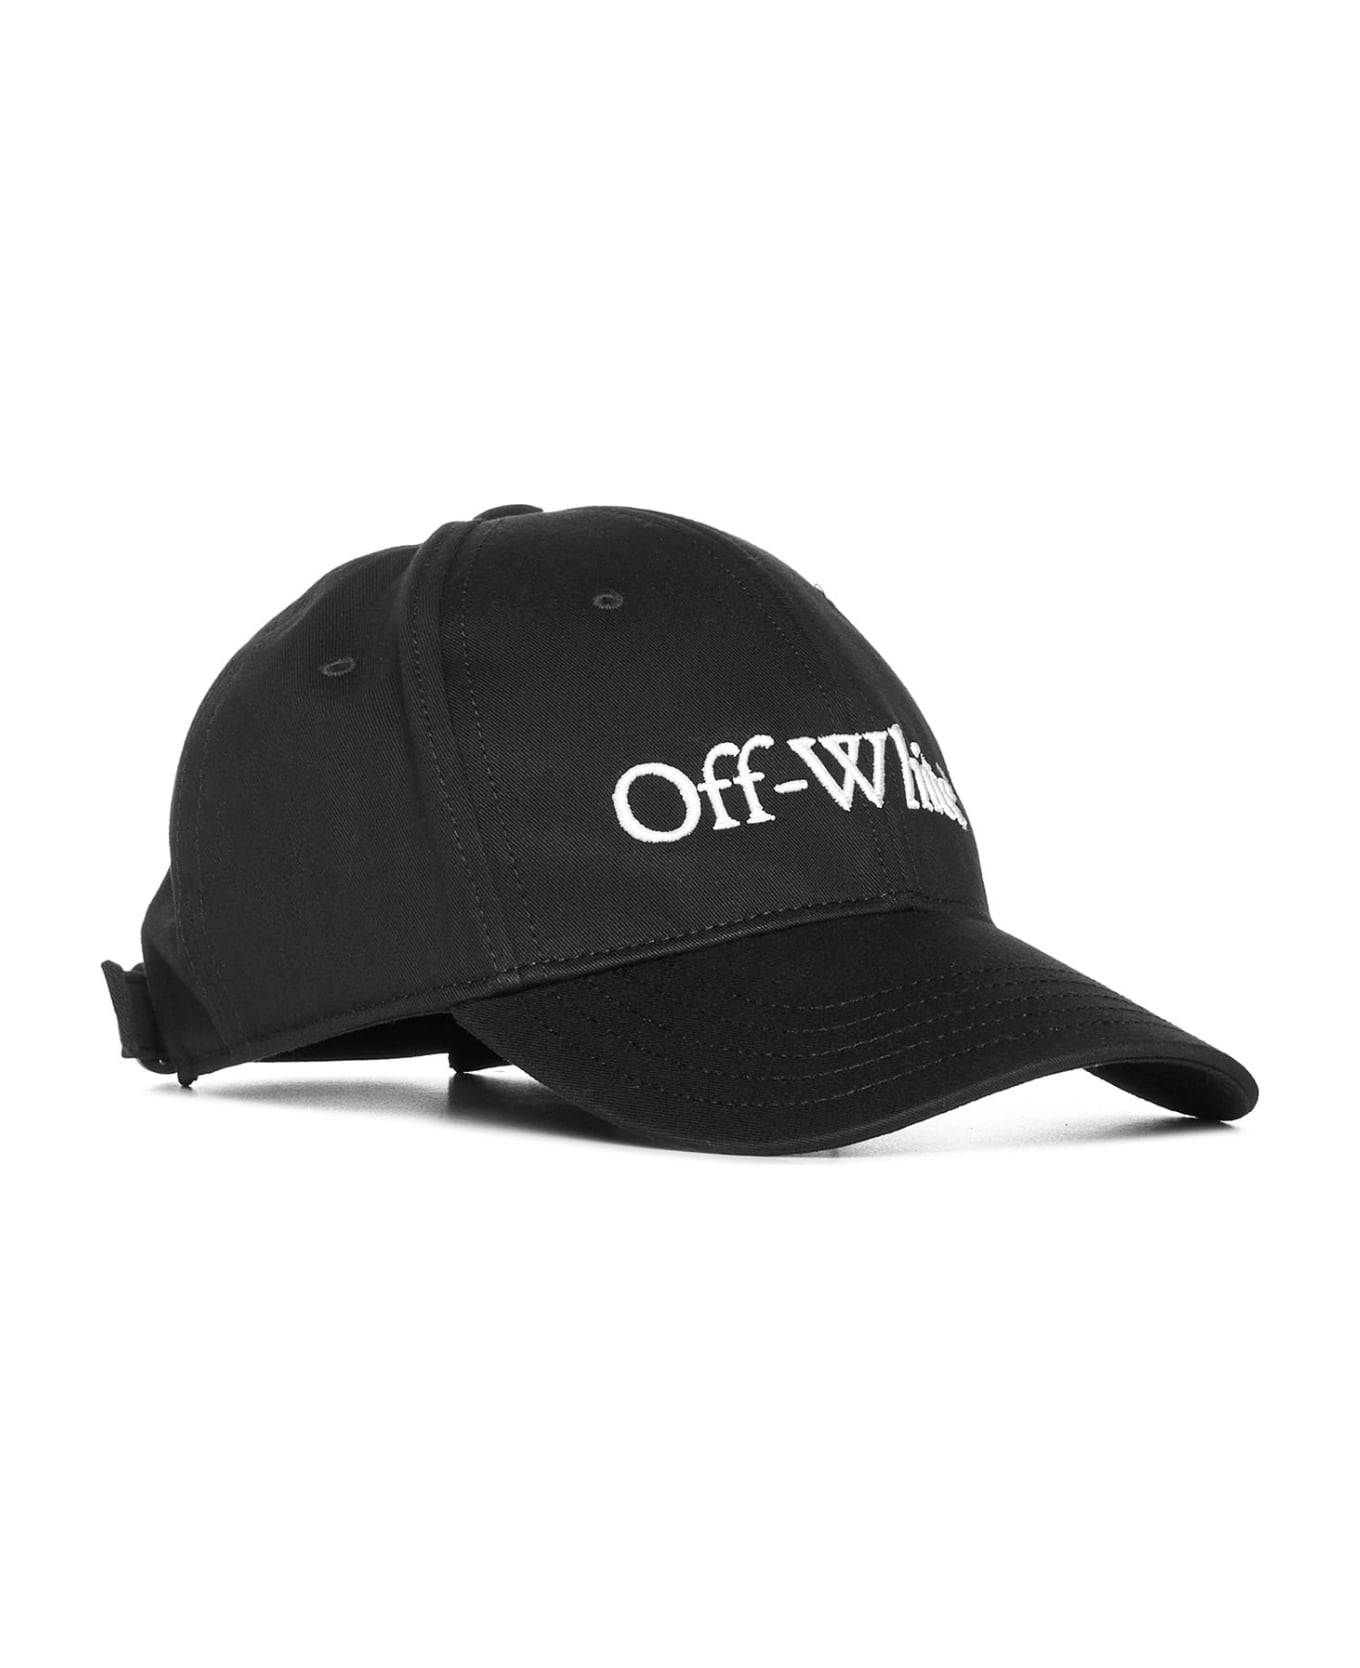 Off-White Black Cap With Logo - Black Whit